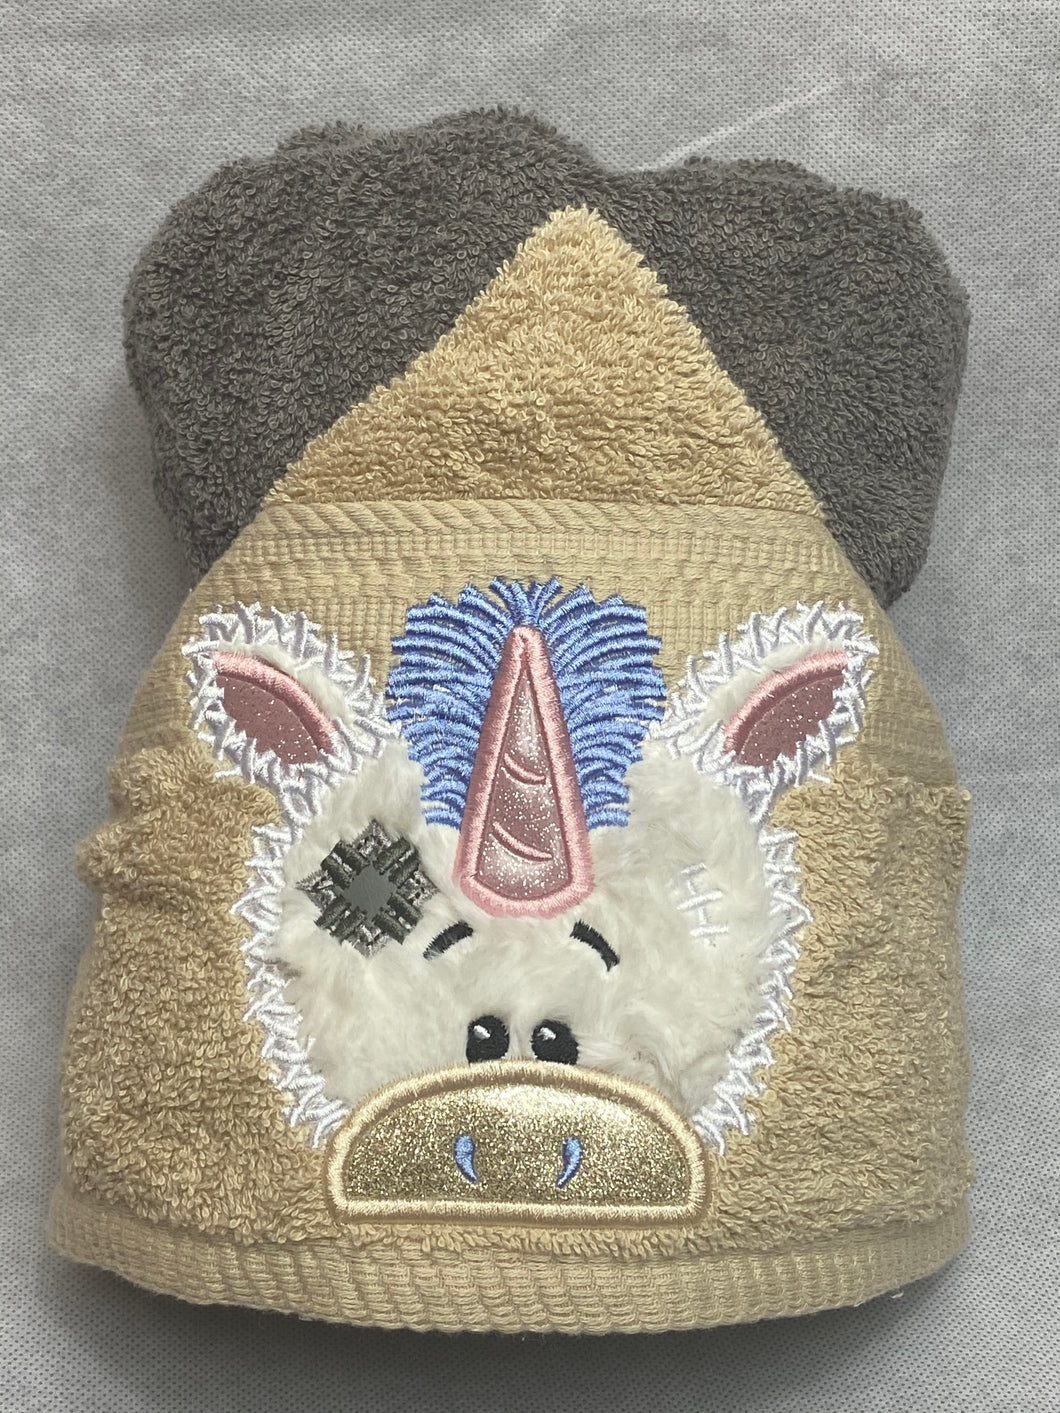 Tattered Unicorn Character Hooded Towel